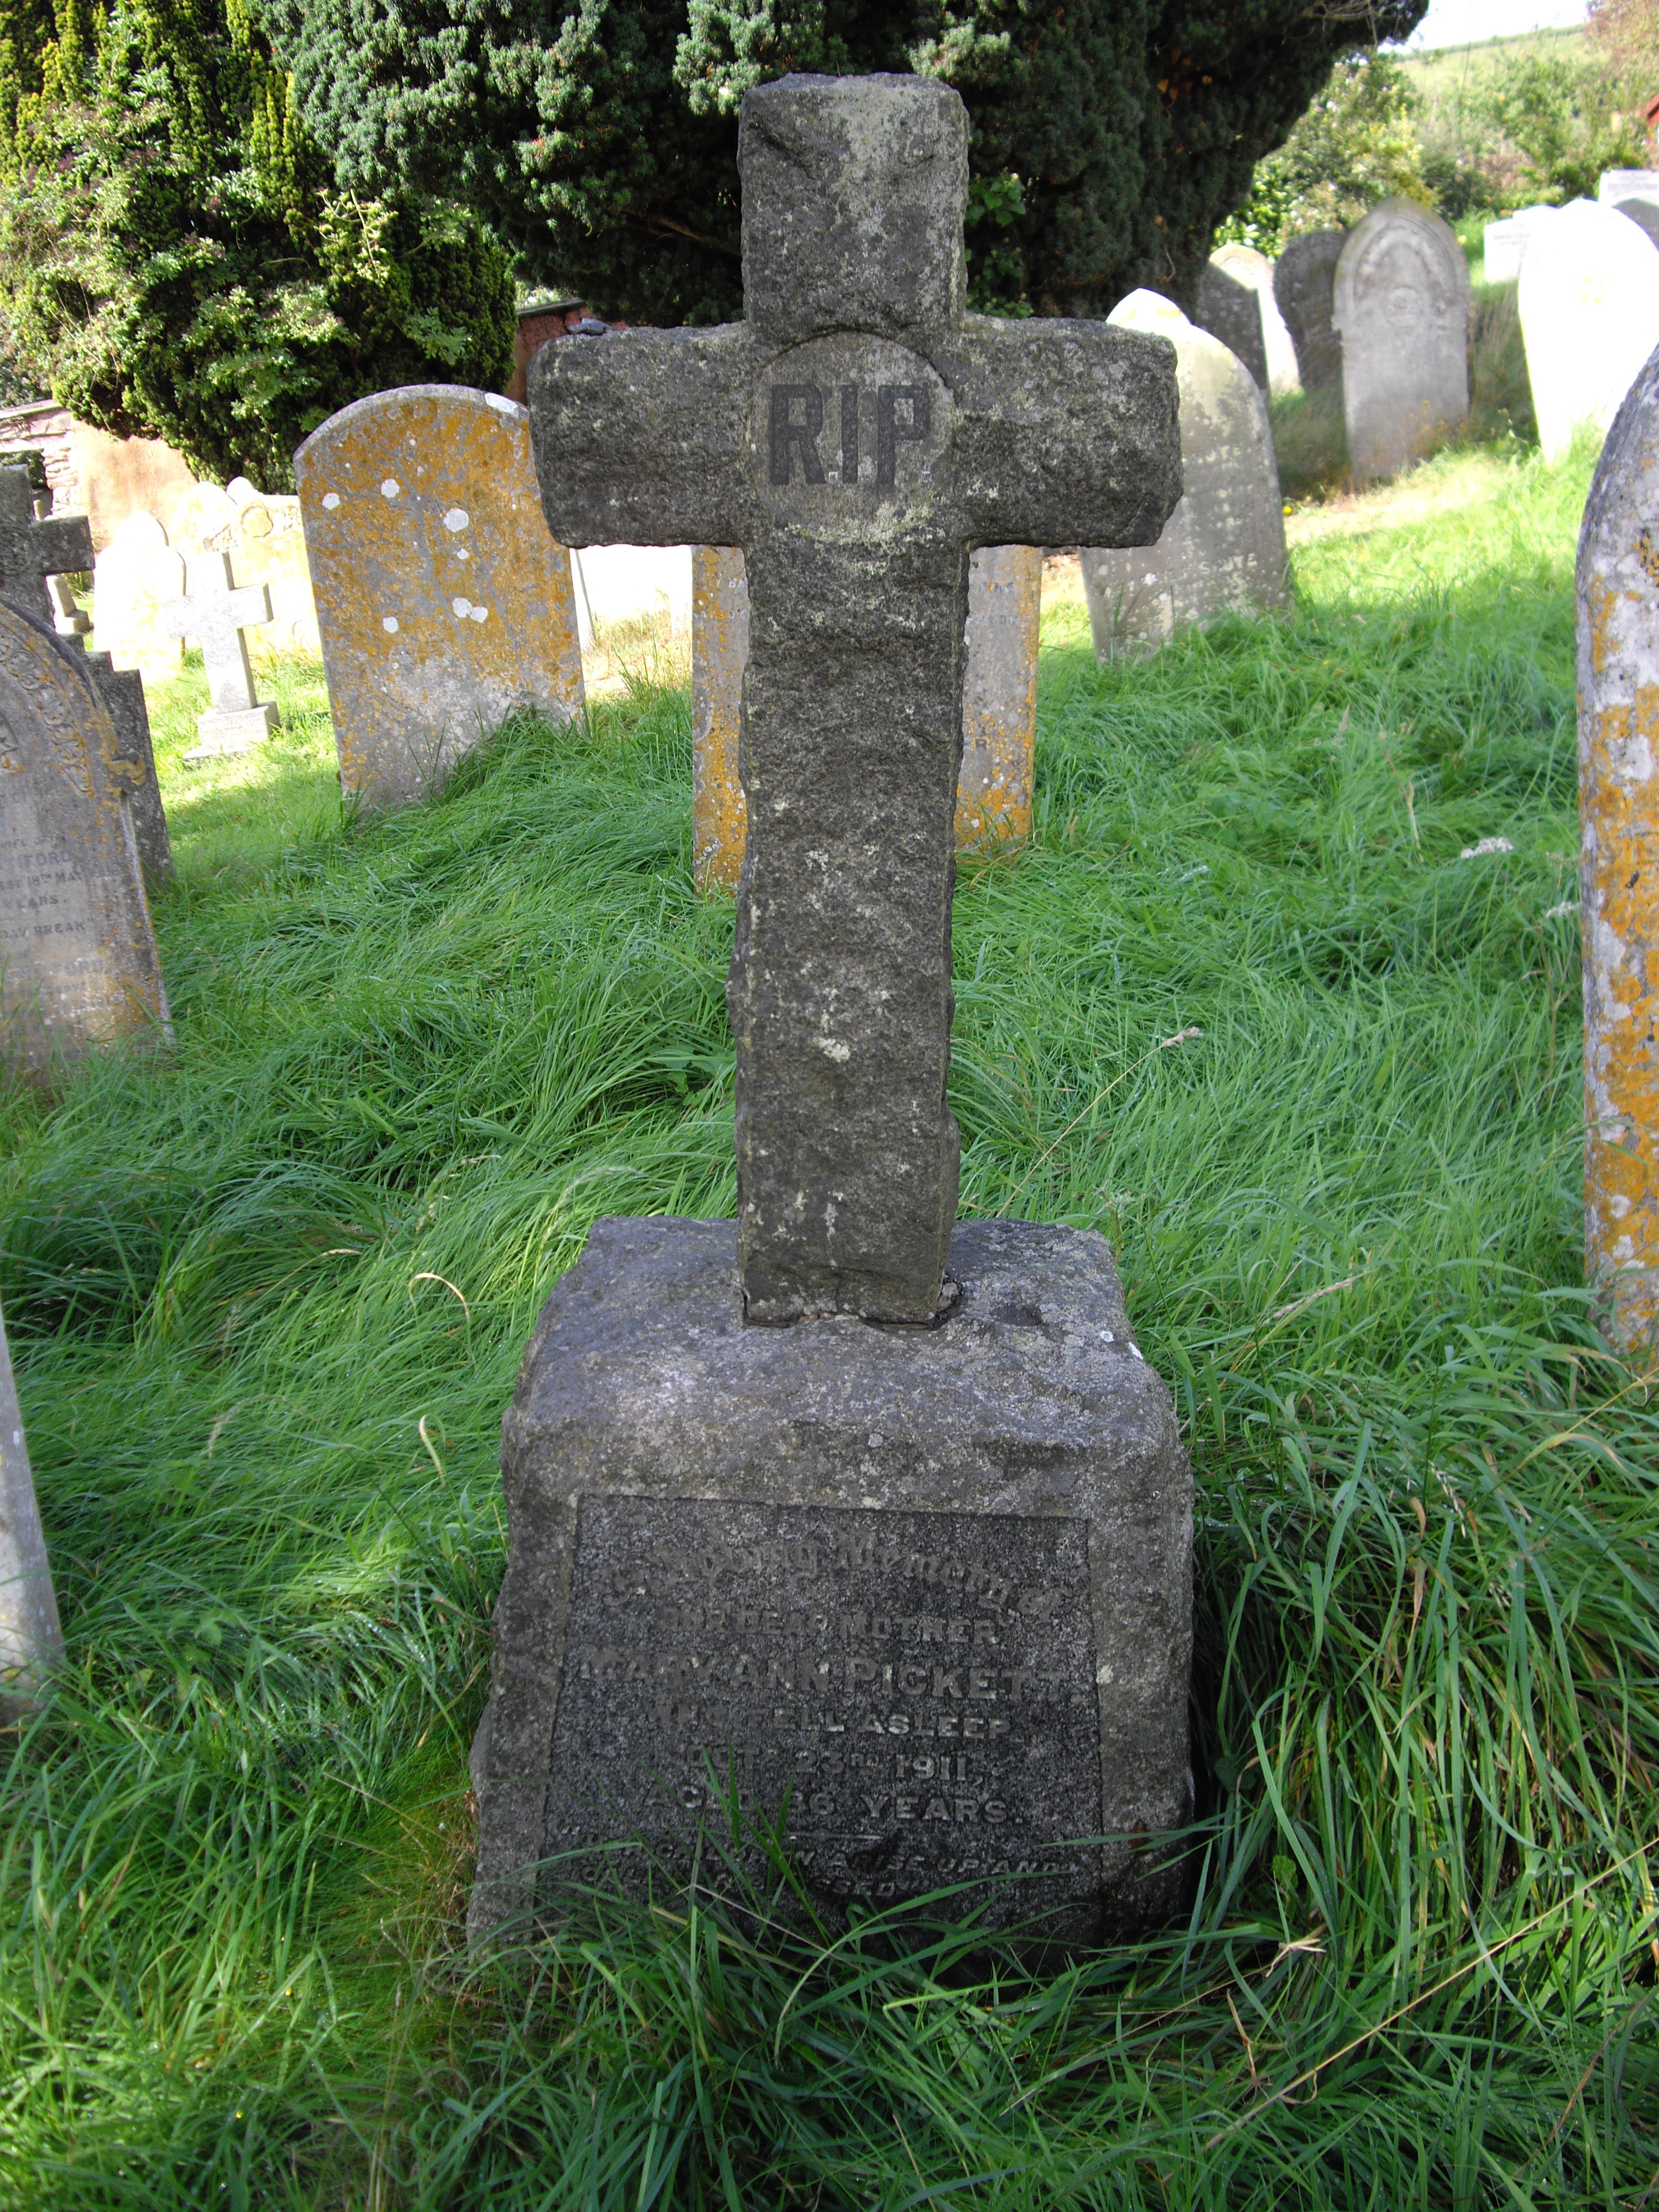 grave of mary ann pickett